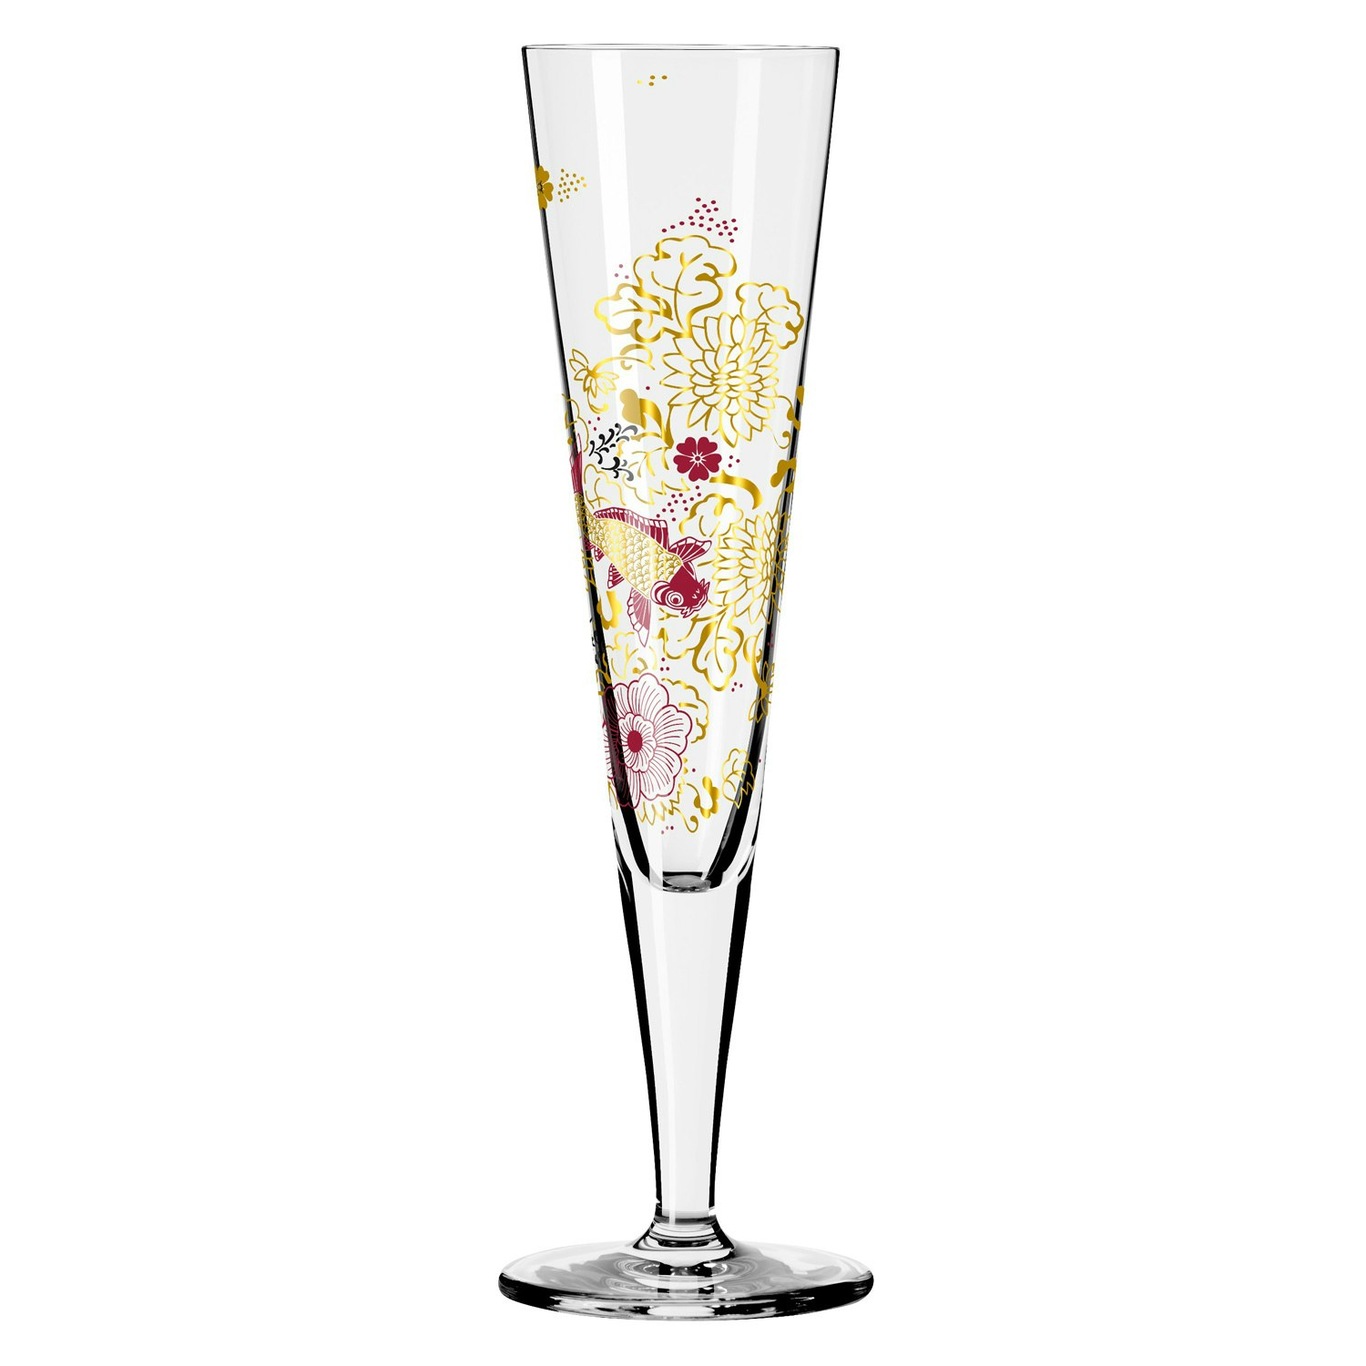 Goldnacht Champagnerglas, NO: 23